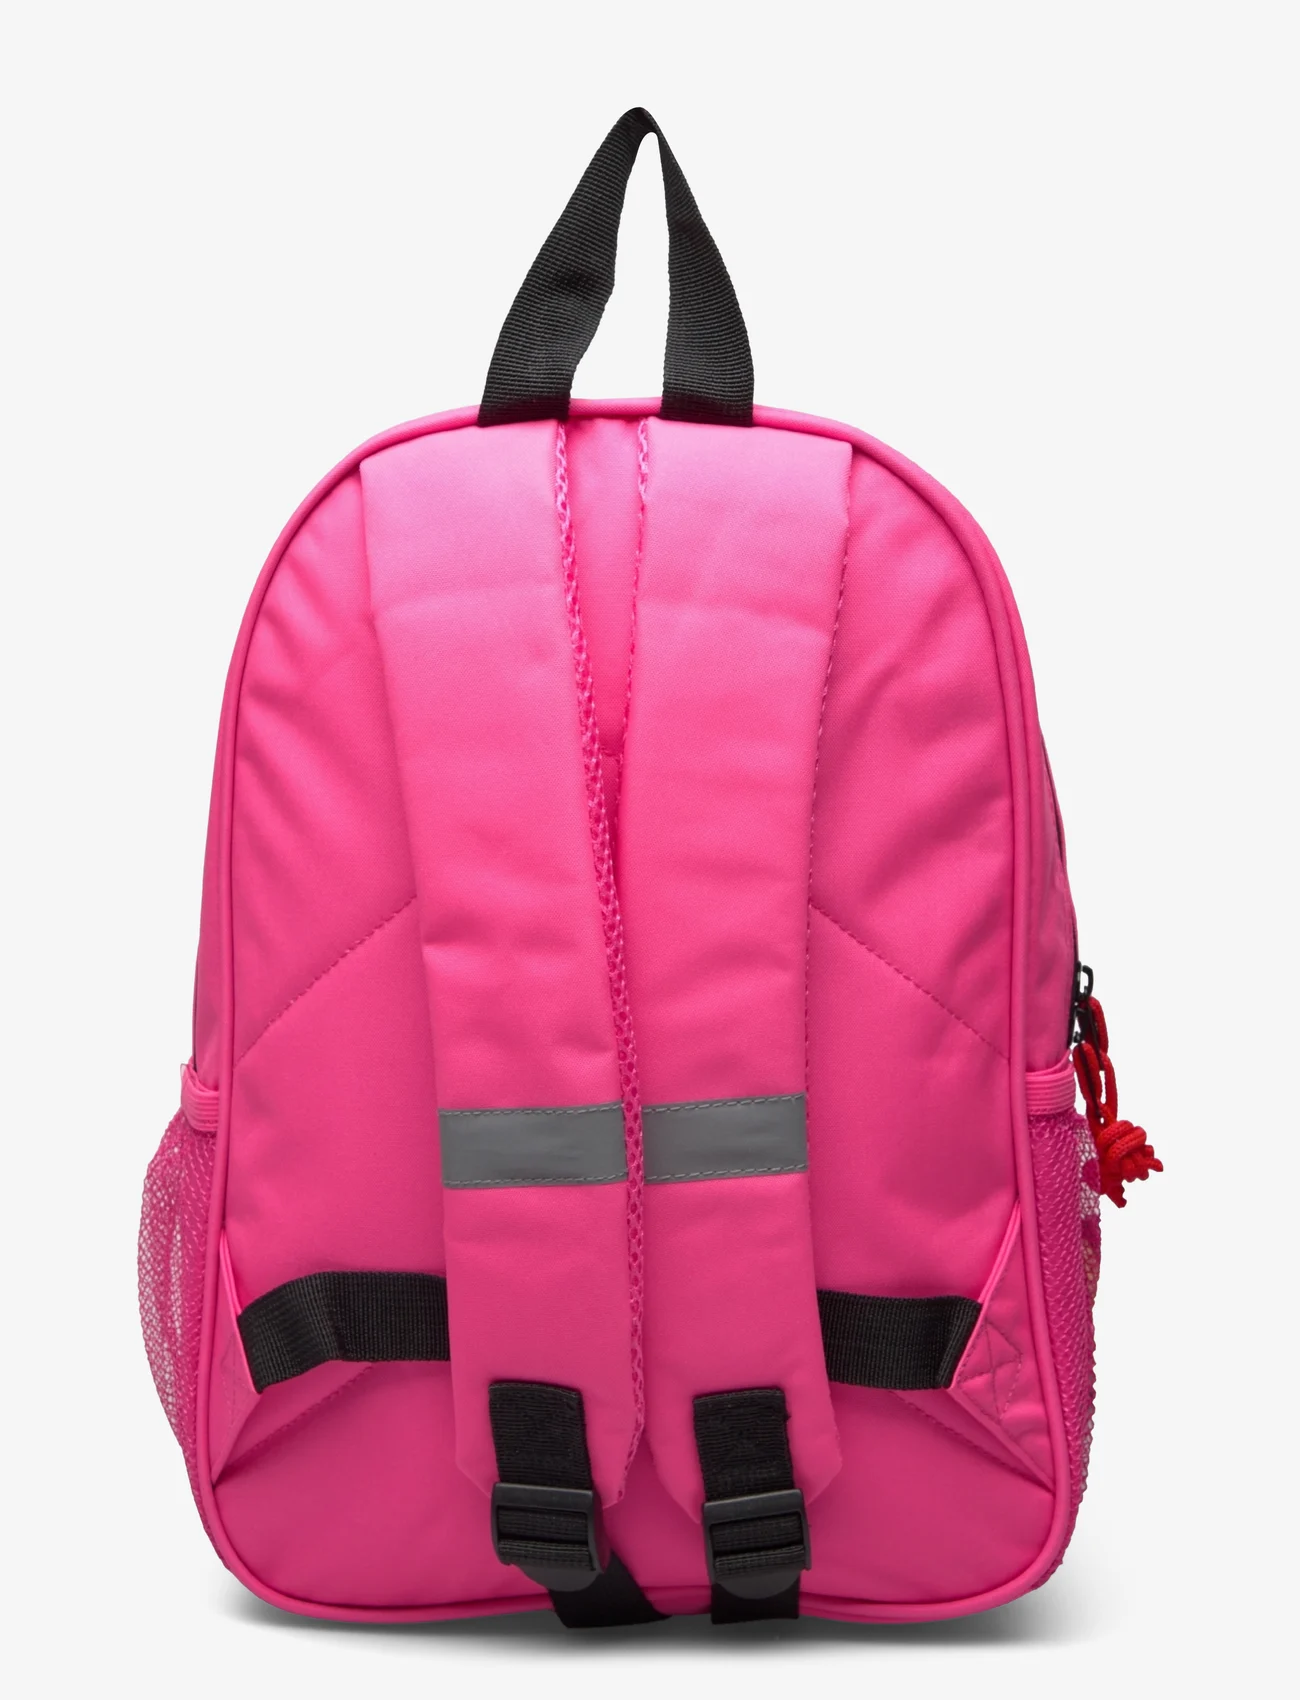 Euromic - L.O.L. NEXT LEVEL medium backpack - sommarfynd - pink - 1